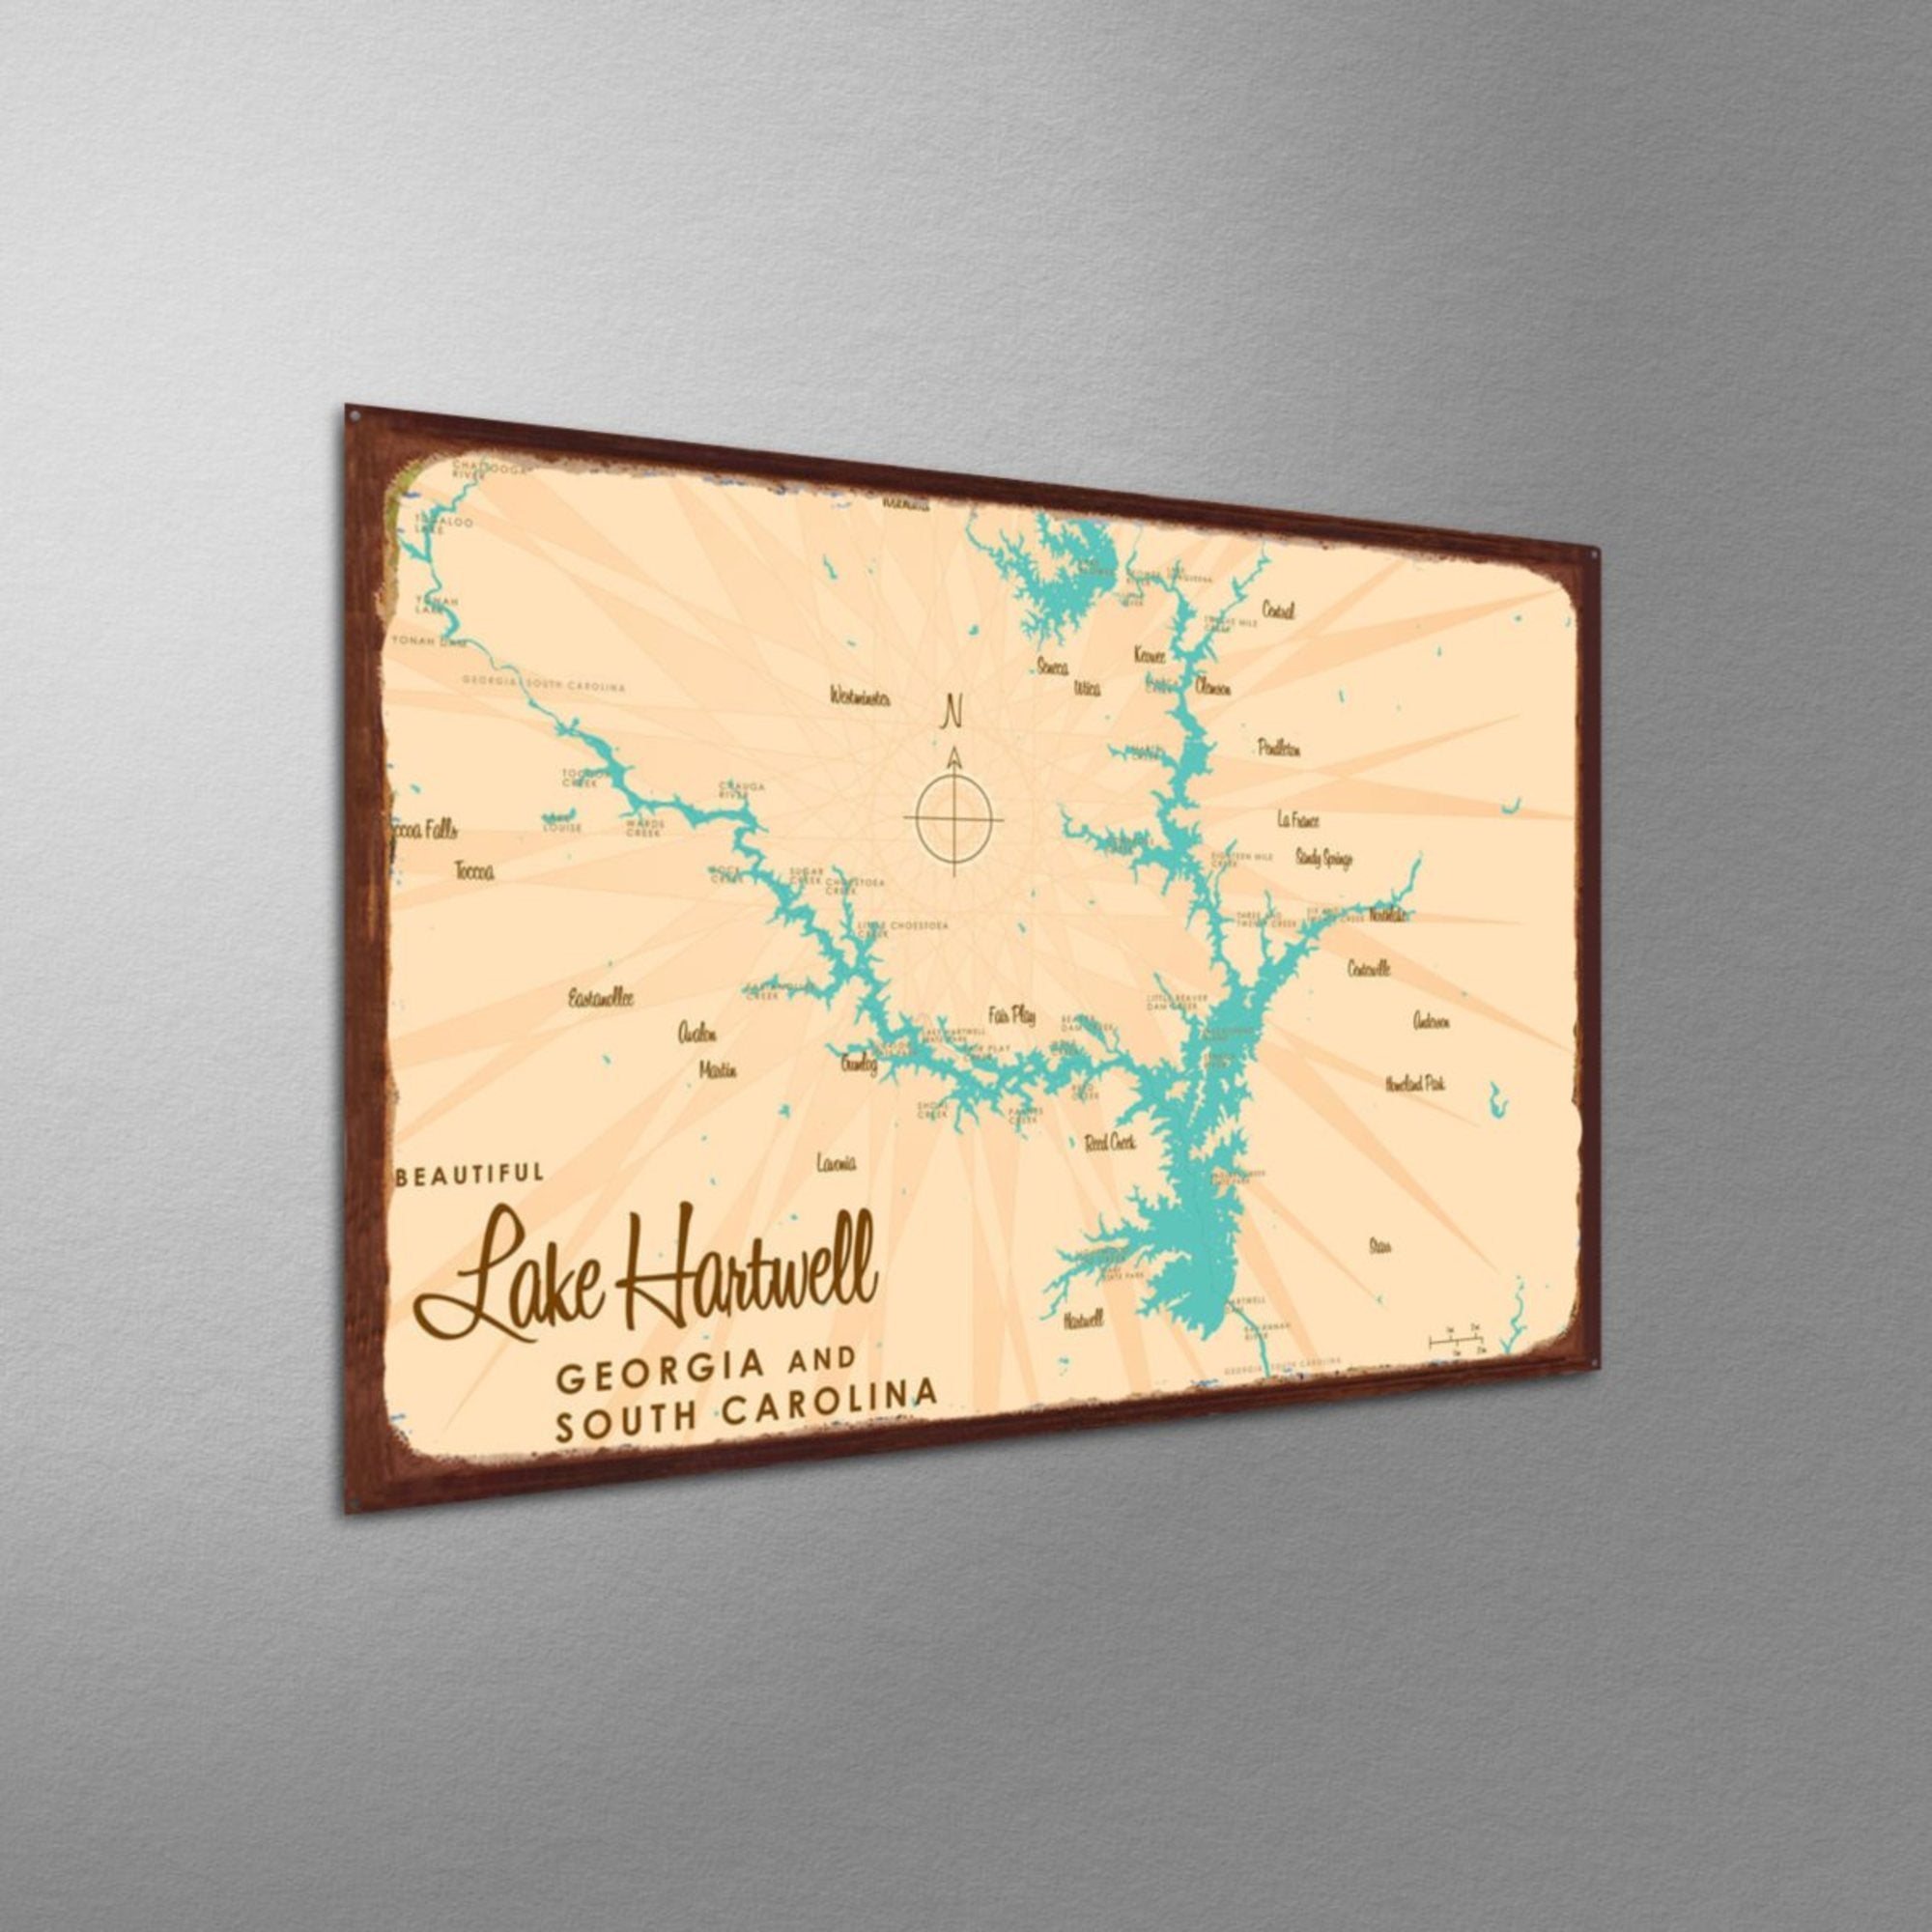 Lake Hartwell Georgia South Carolina, Rustic Metal Sign Map Art